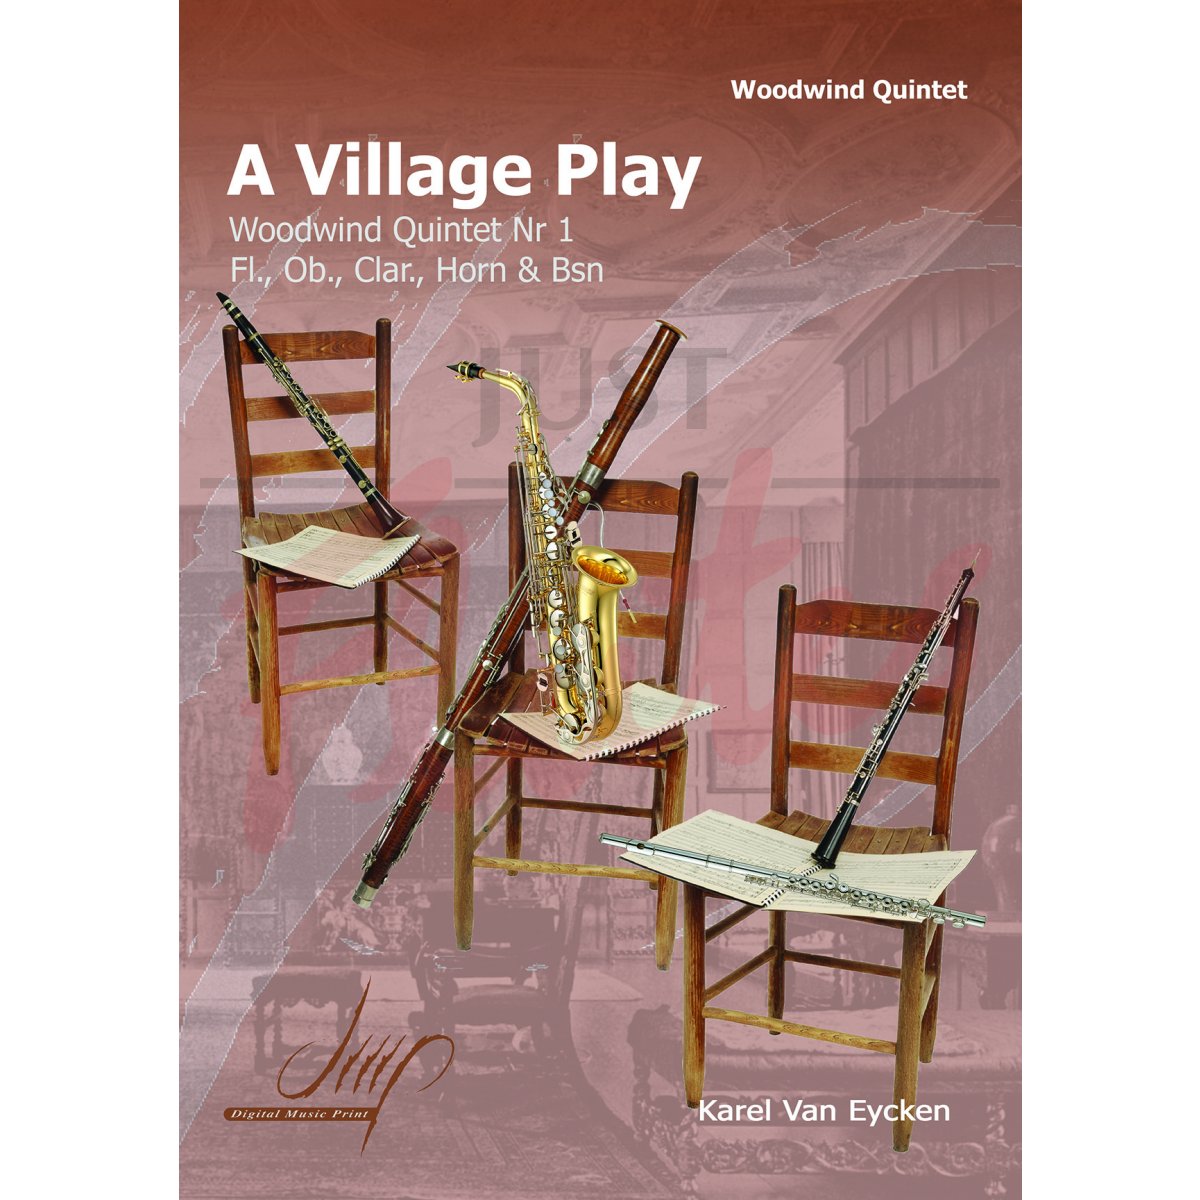 A Village Play